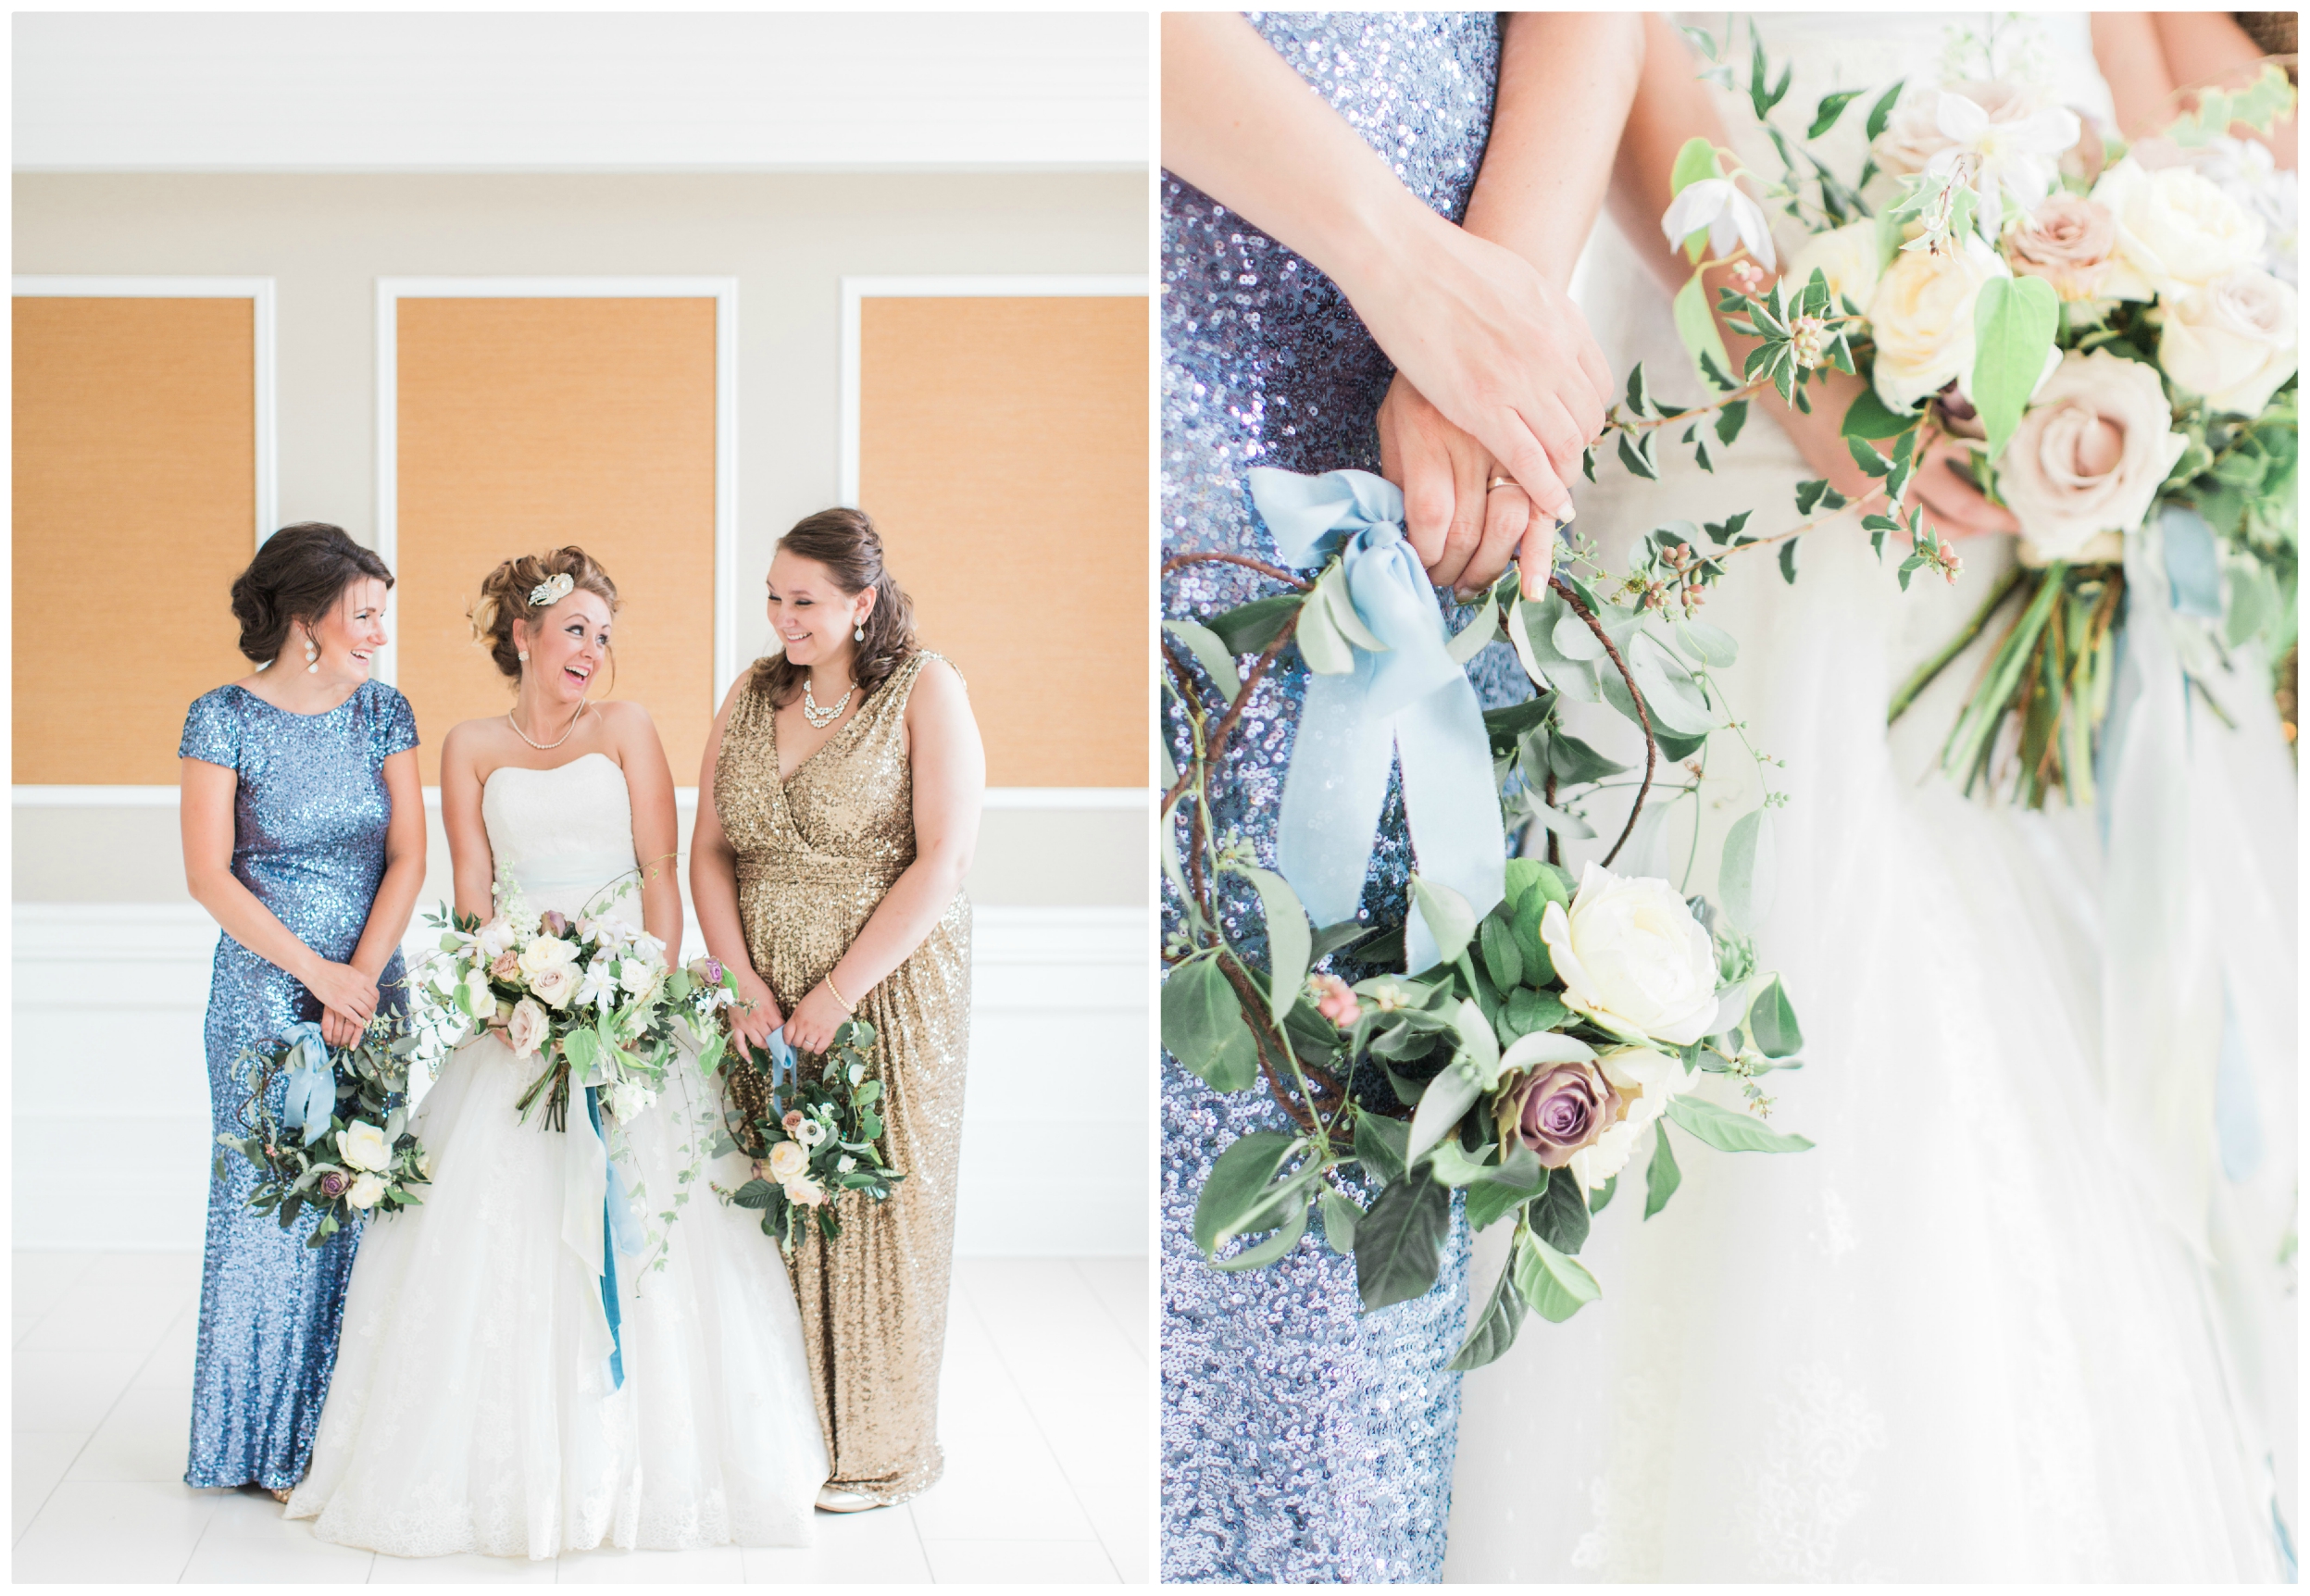 Gold & Blue Bridesmaids | The Day's Design | Samantha James Photography